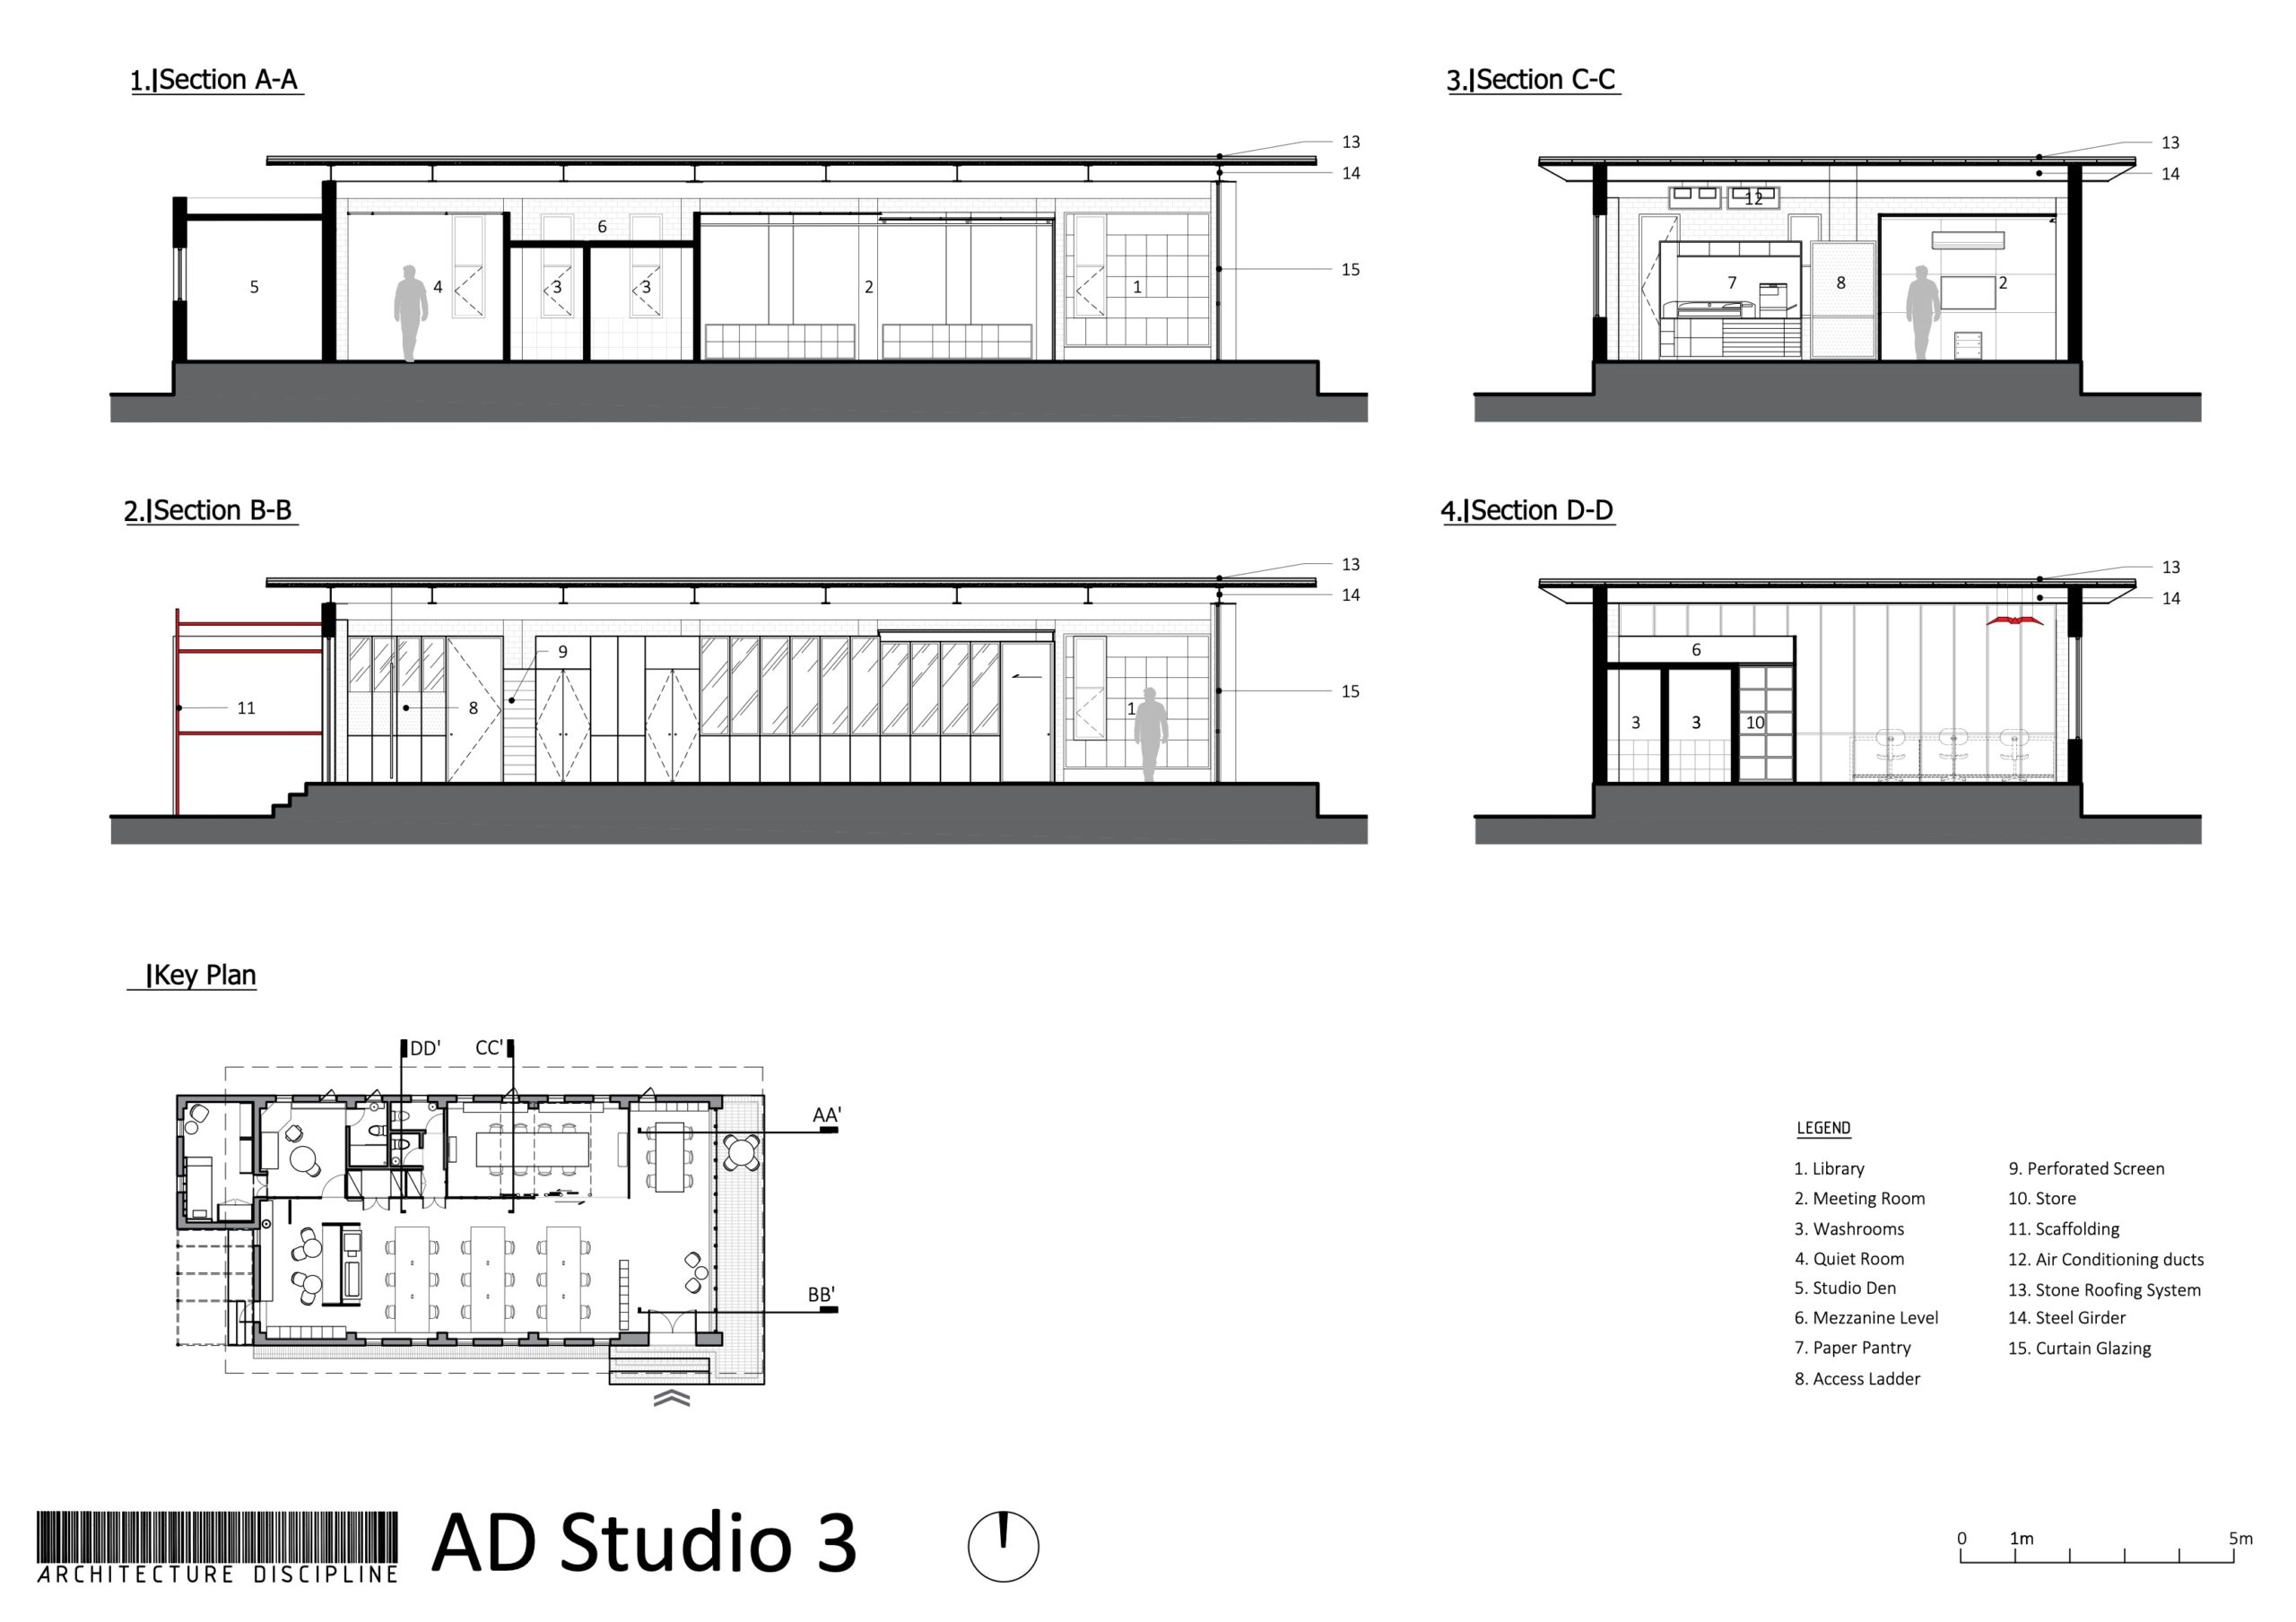 Studio 3, New Delhi, Office of Architecture Discipline 48